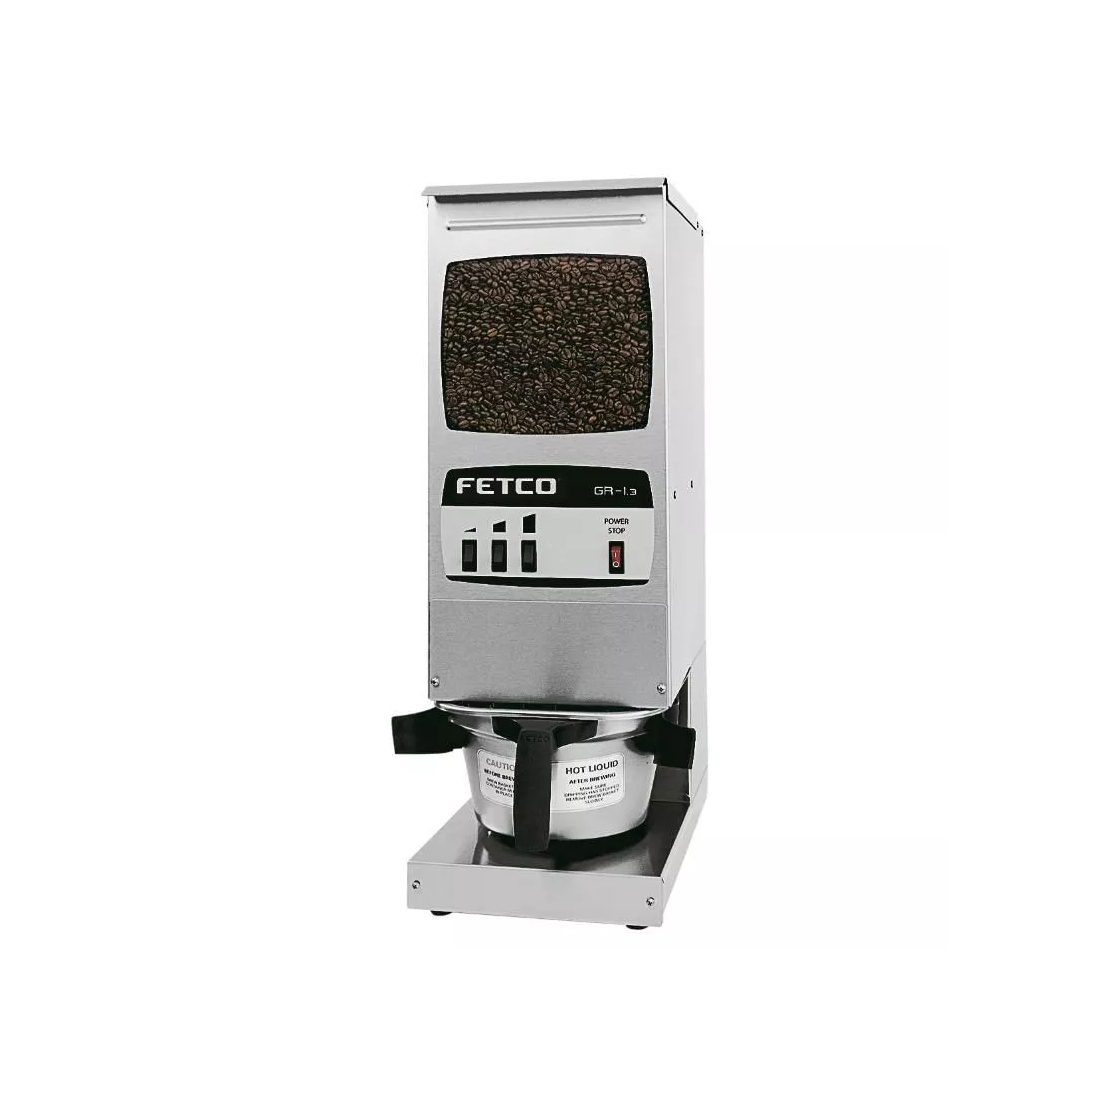 FETCO (GR 1.3) Single Hopper Coffee Grinder|mkayn|مكاين